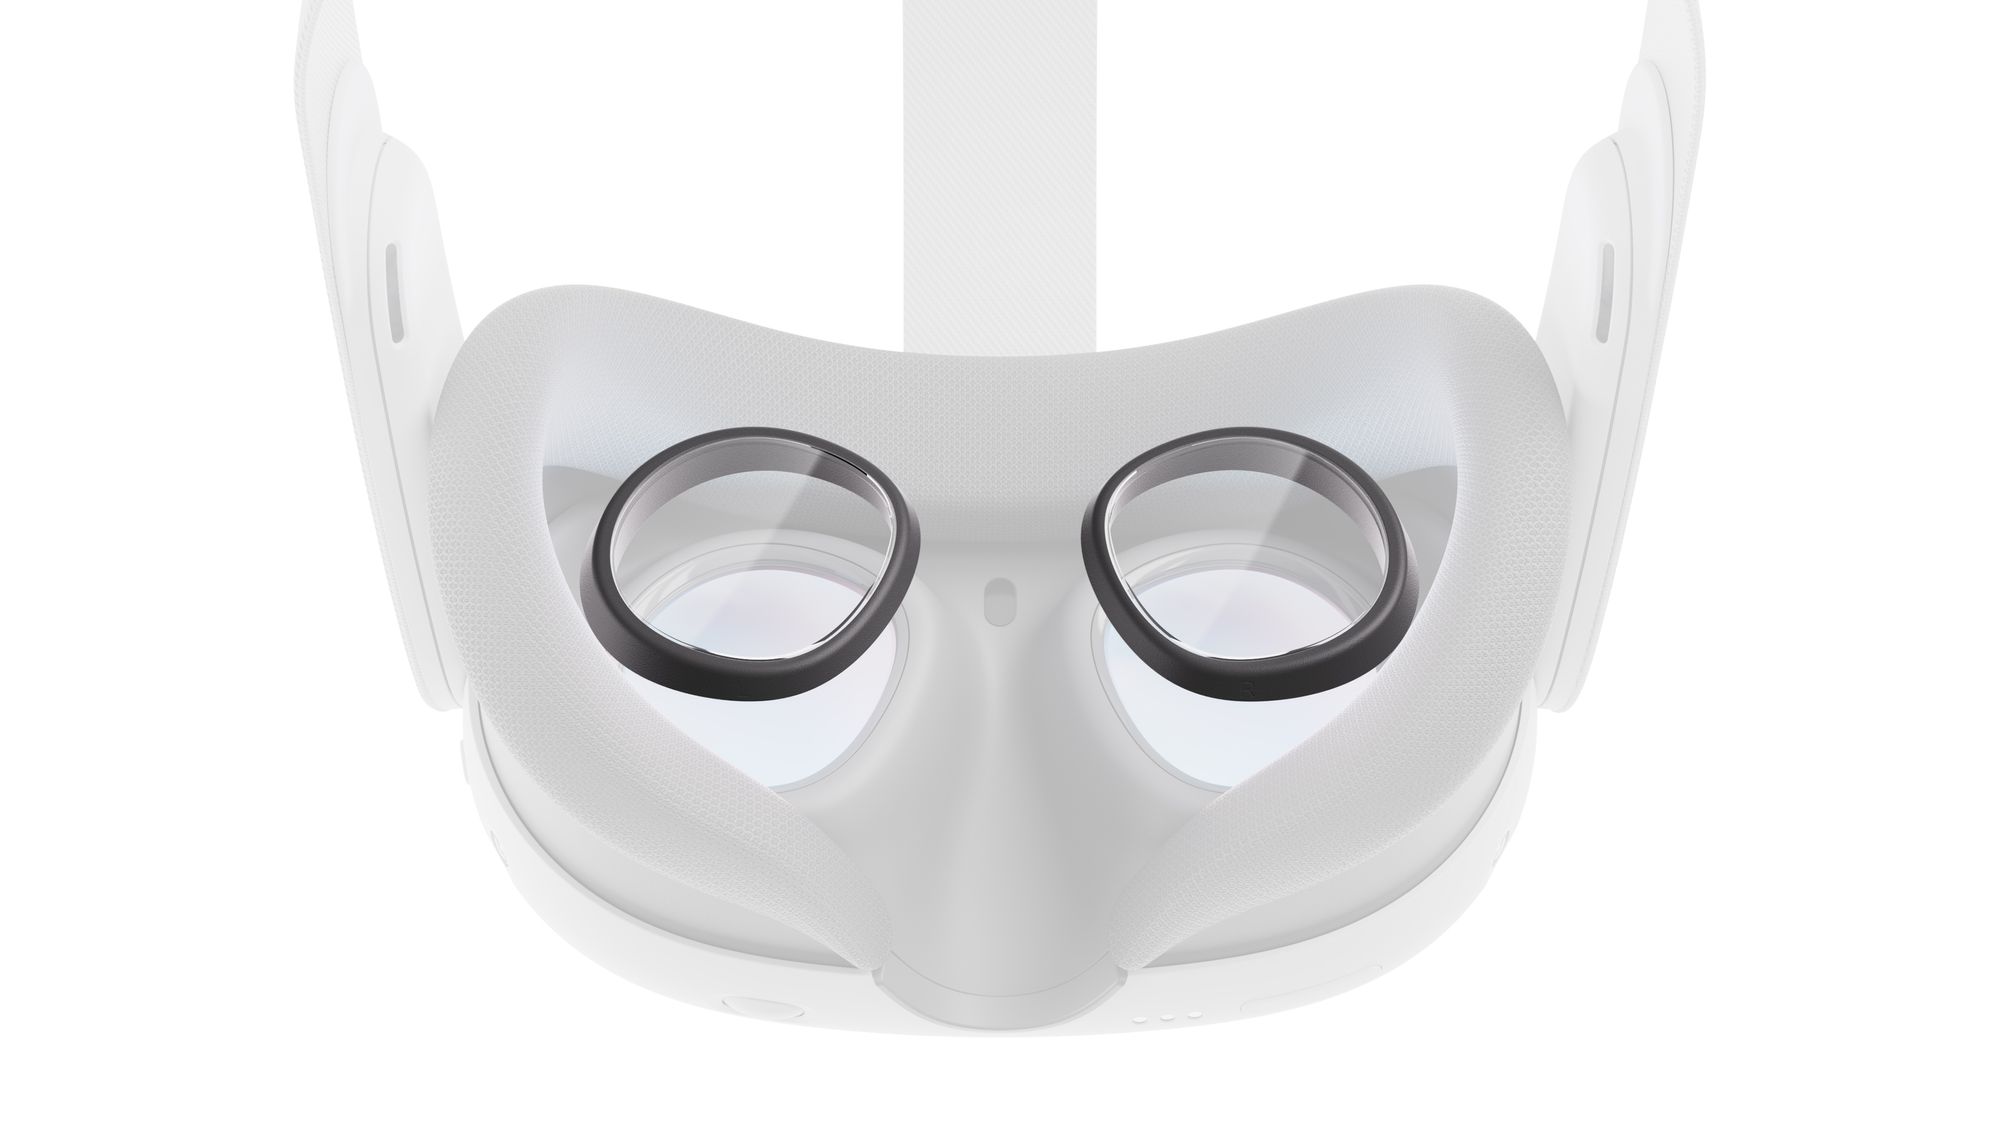  APEXINNO VR Silicone Face Pad Cover for Quest 3